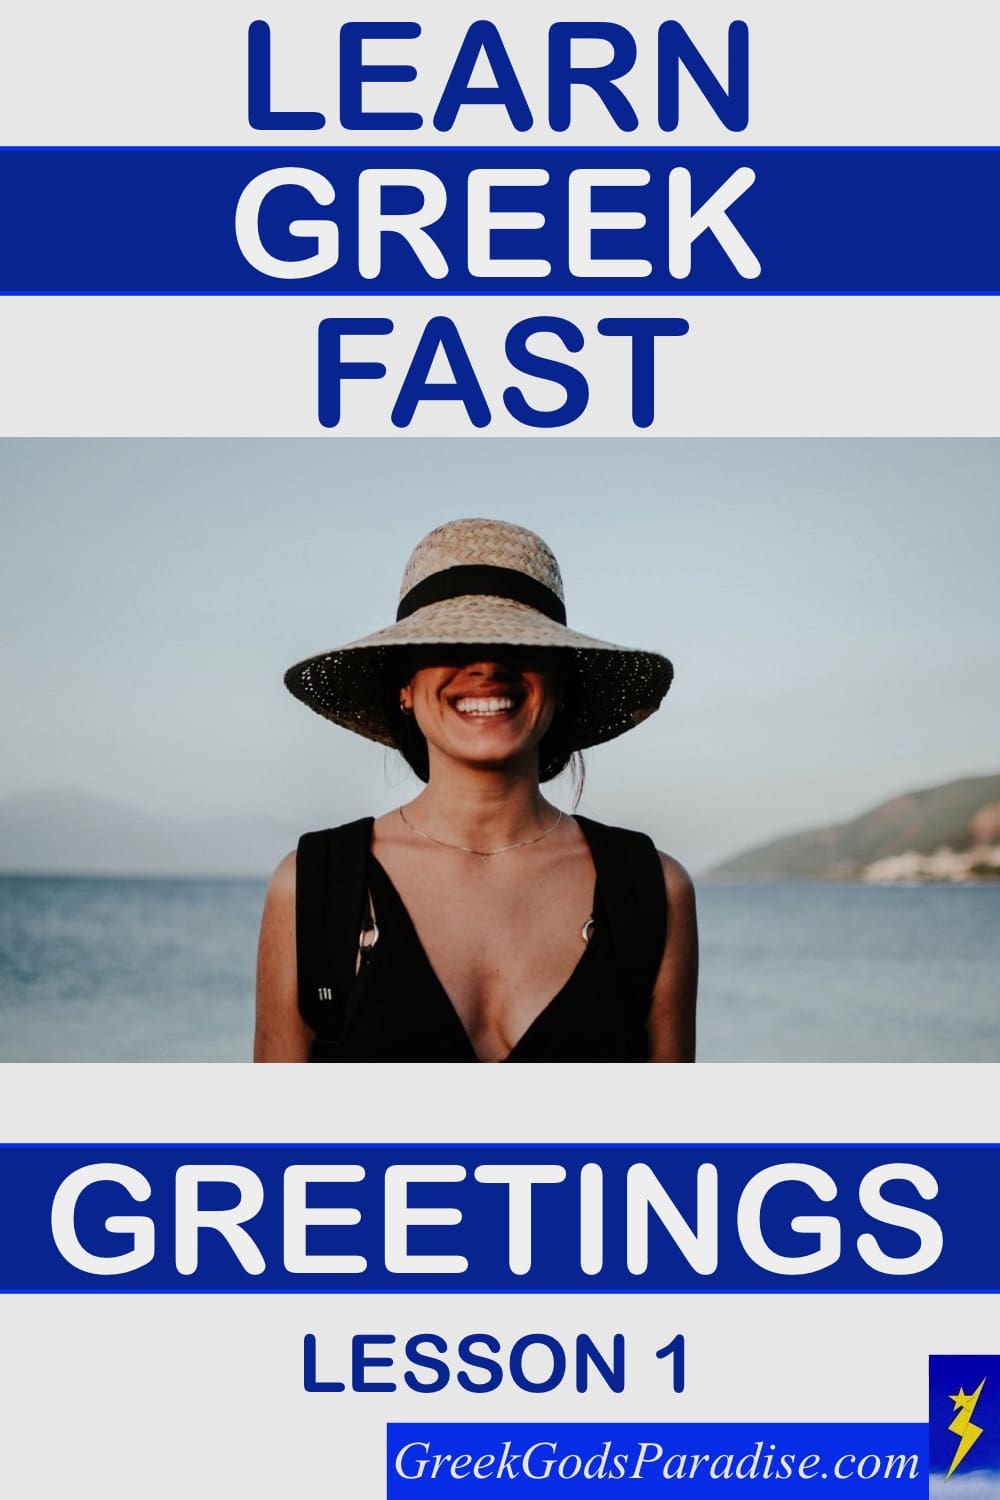 Learn Greek Fast Greetings Lesson 1